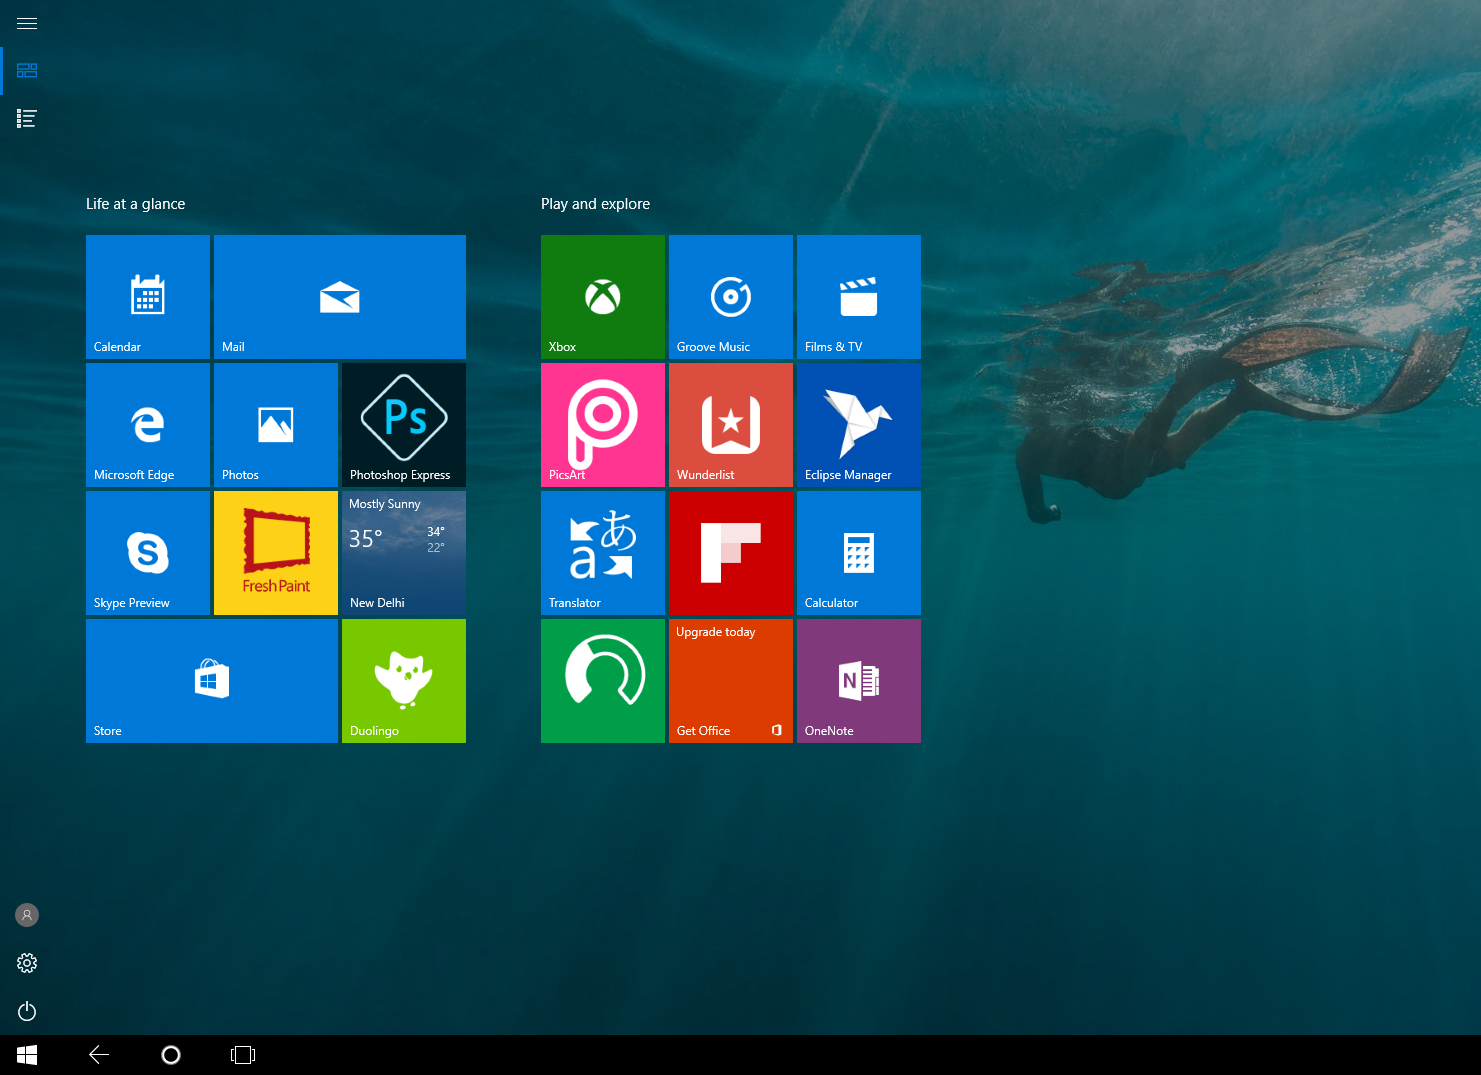 Tablet Mode Display in Windows 10